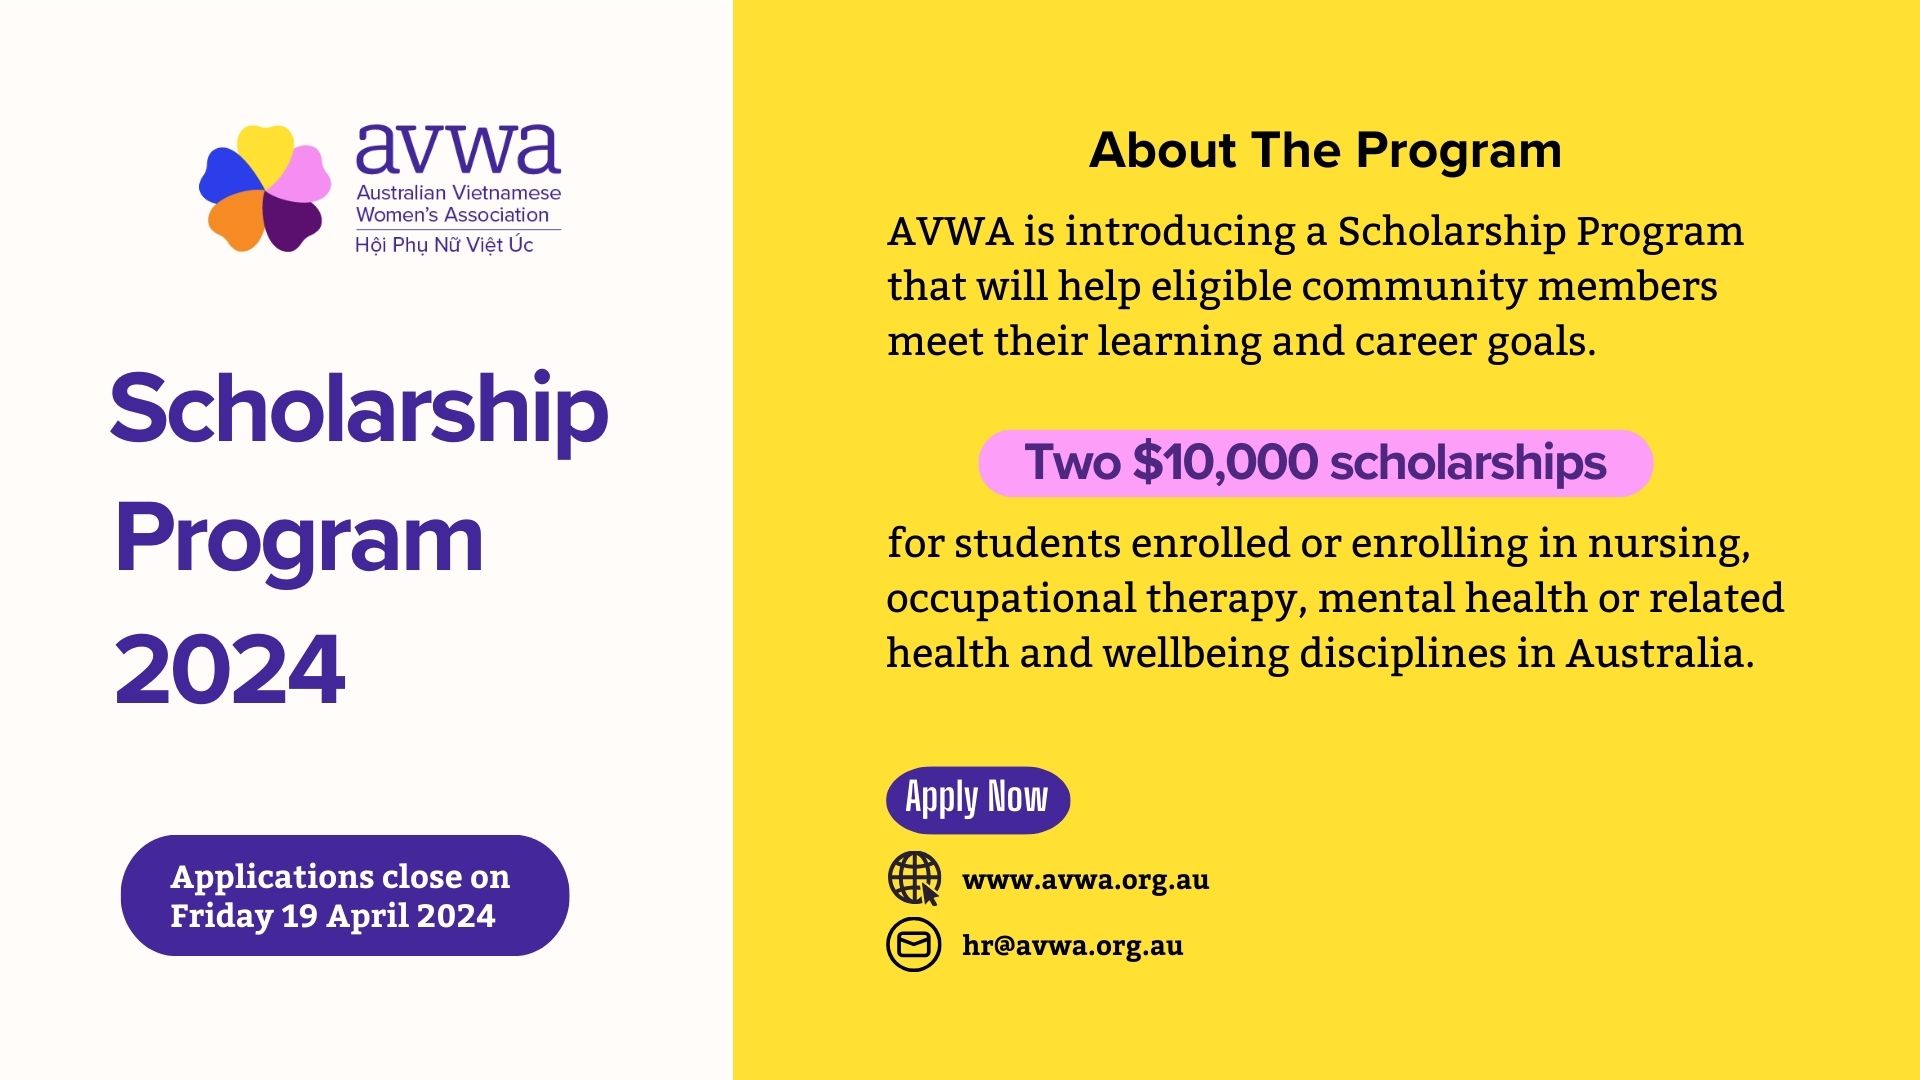 AVWA’s Scholarship Program